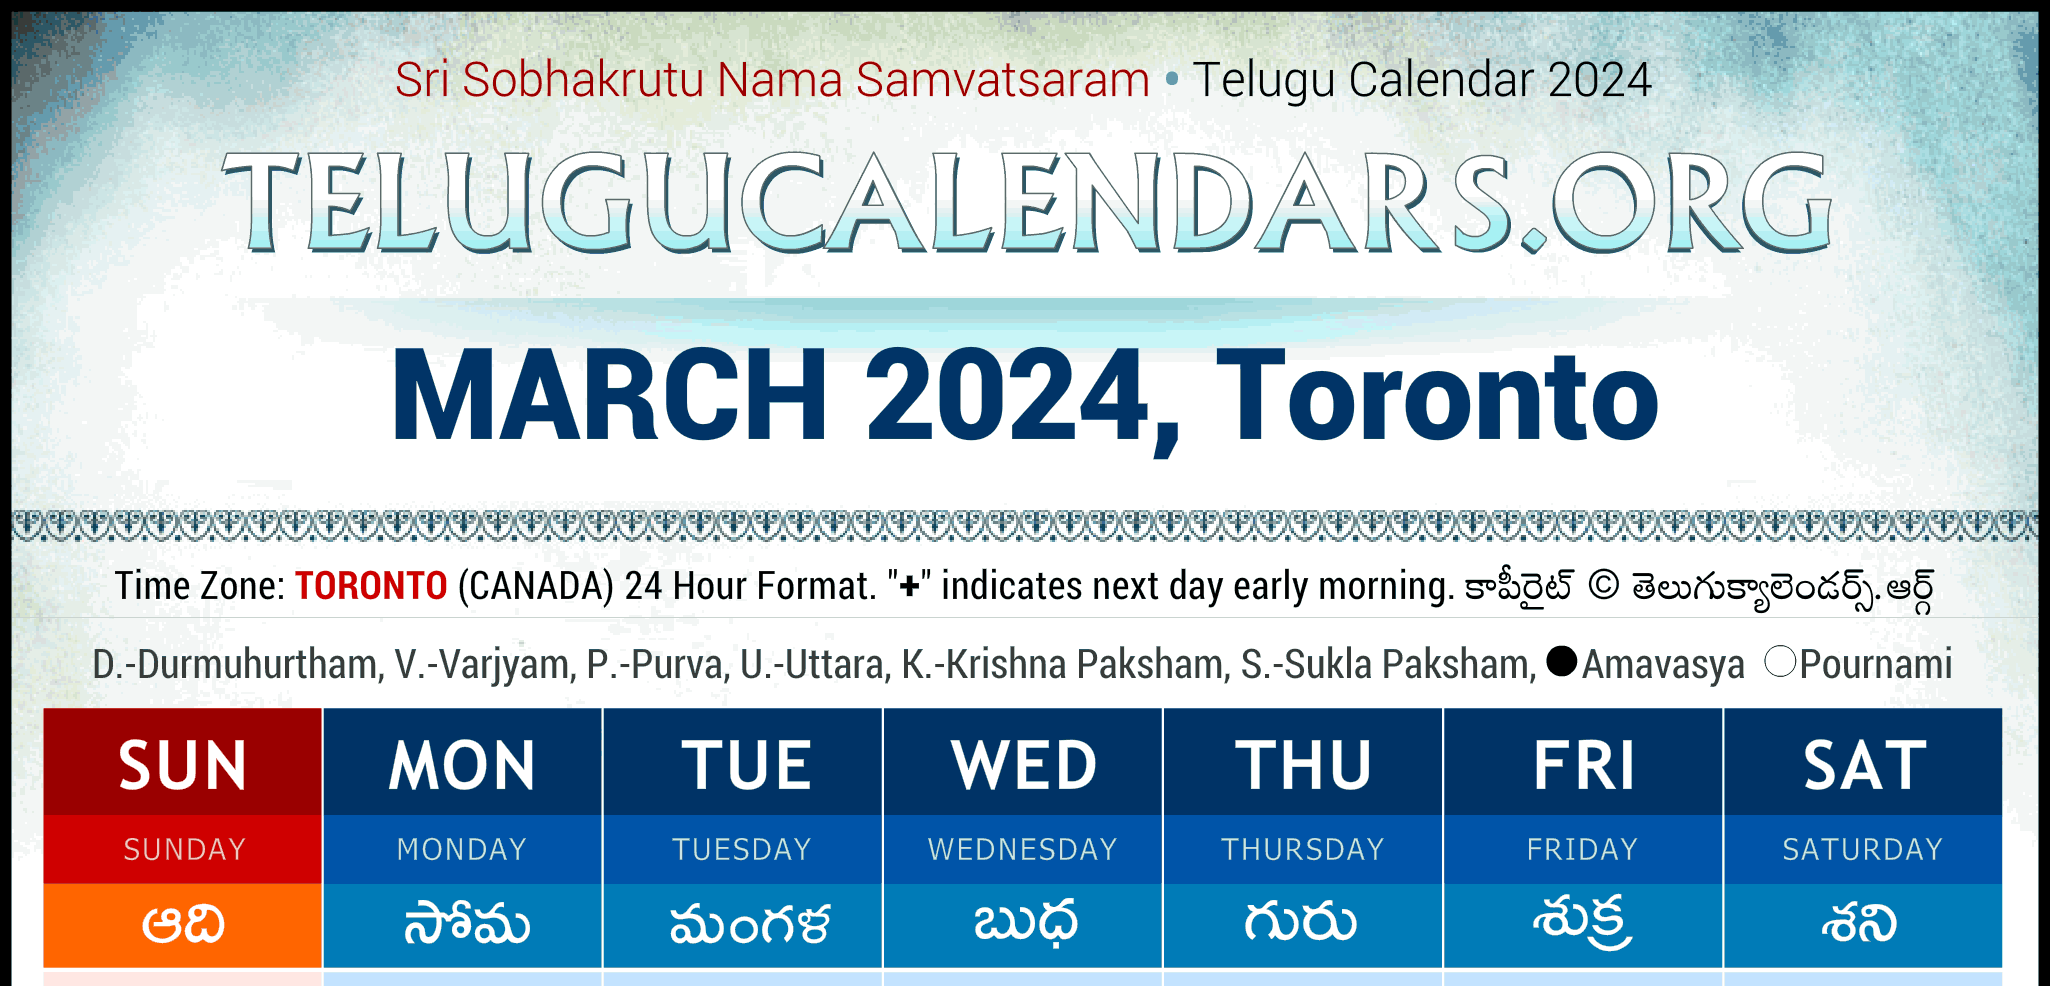 Telugu Calendar 2024 Toronto